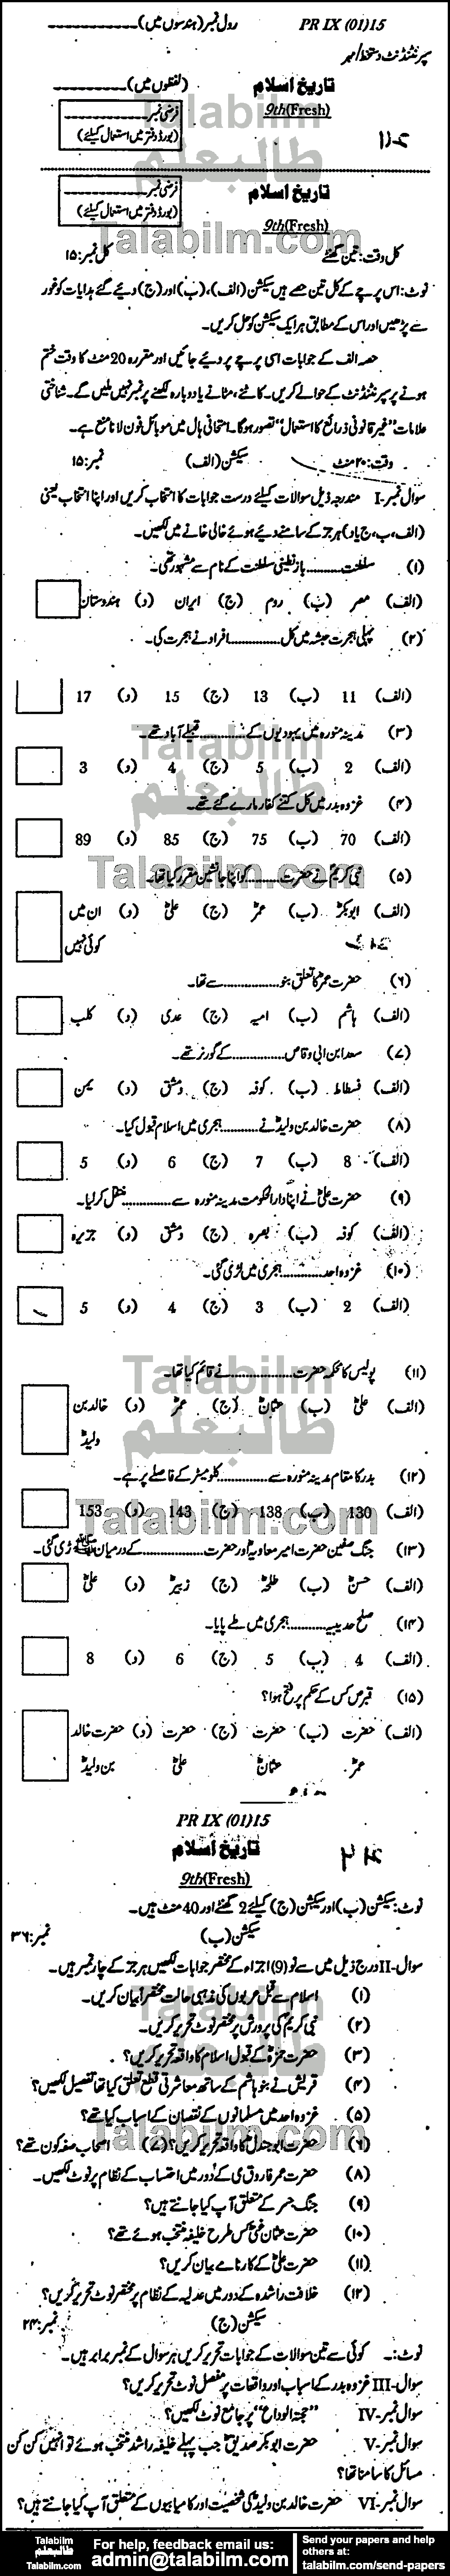 Islamic History 0 past paper for Urdu Medium 2015 Group-I